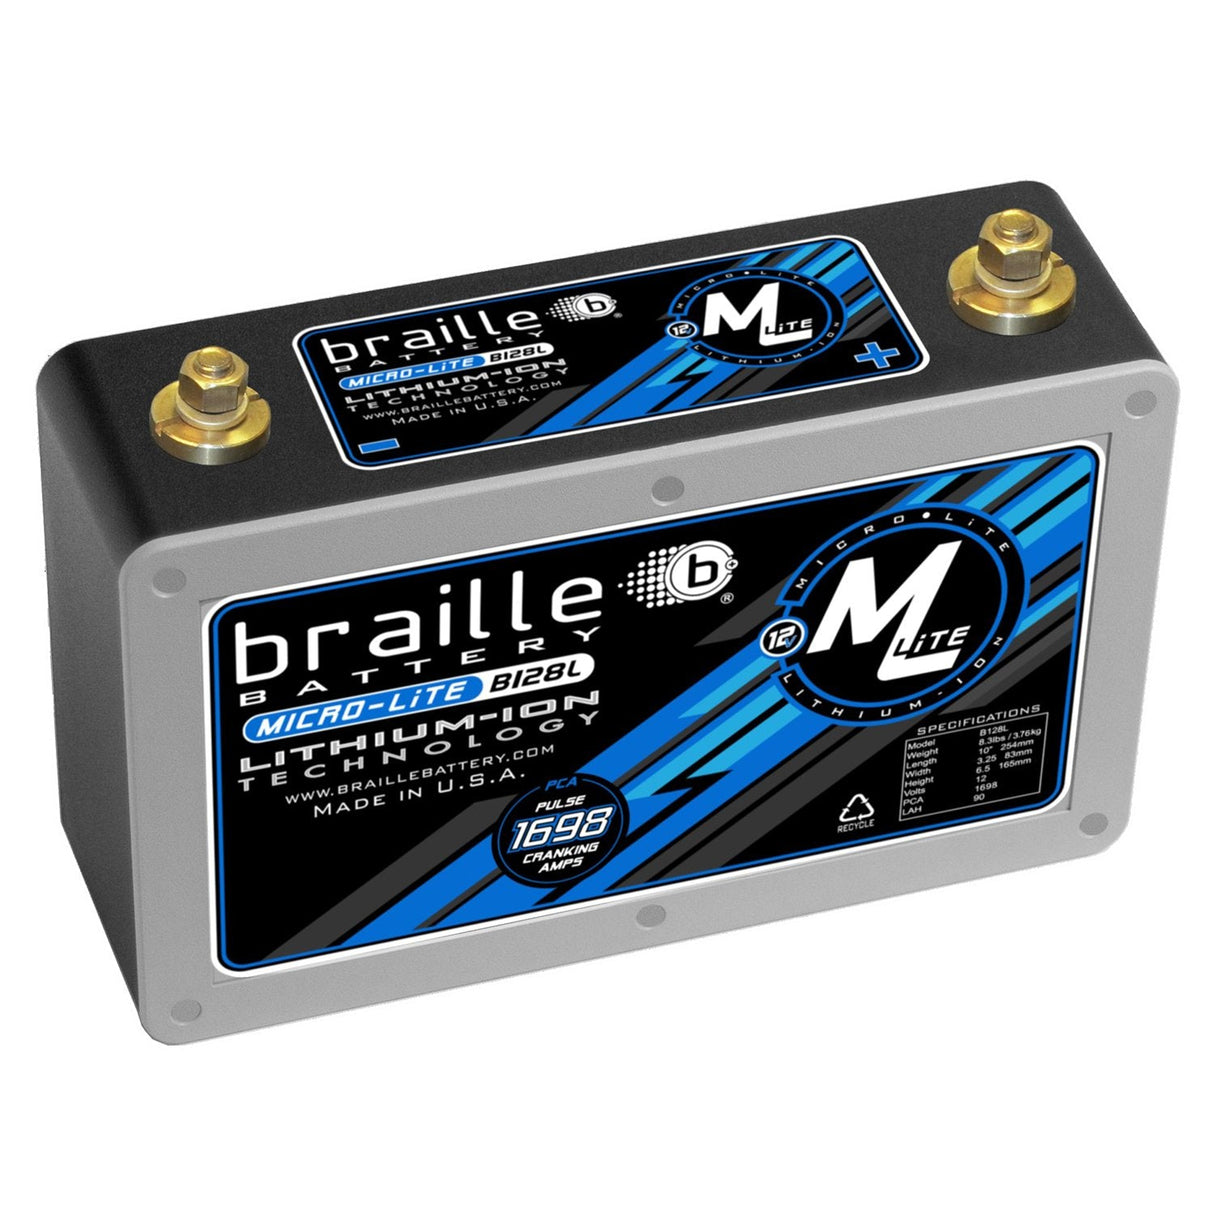 B128L - MicroLite B128L (3/8" stud) lithium battery